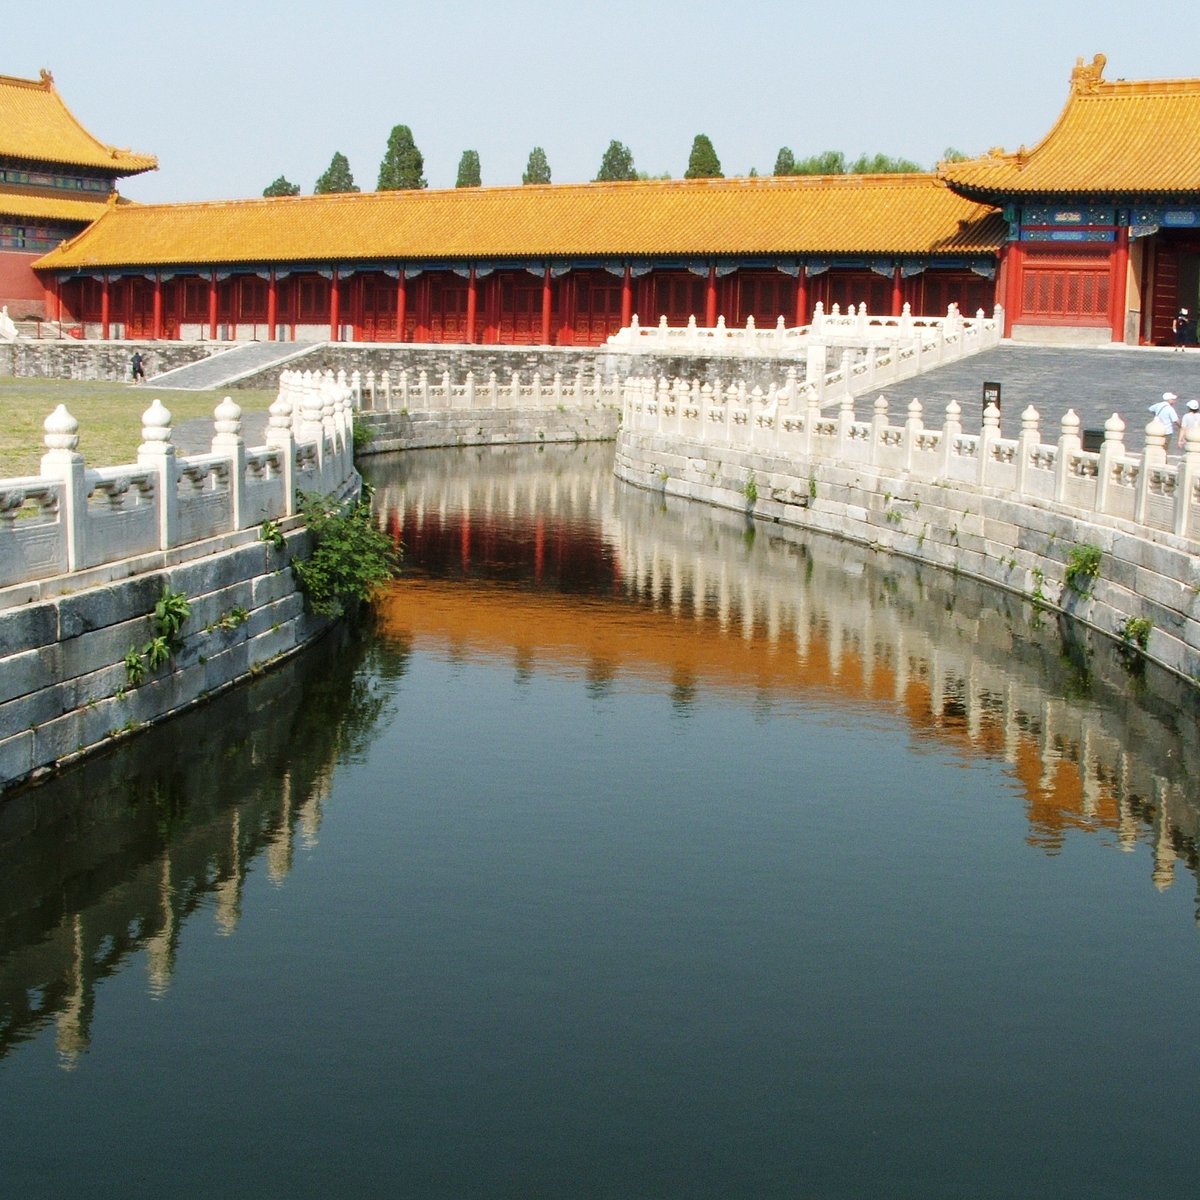 Description of the Forbidden city of Beijing